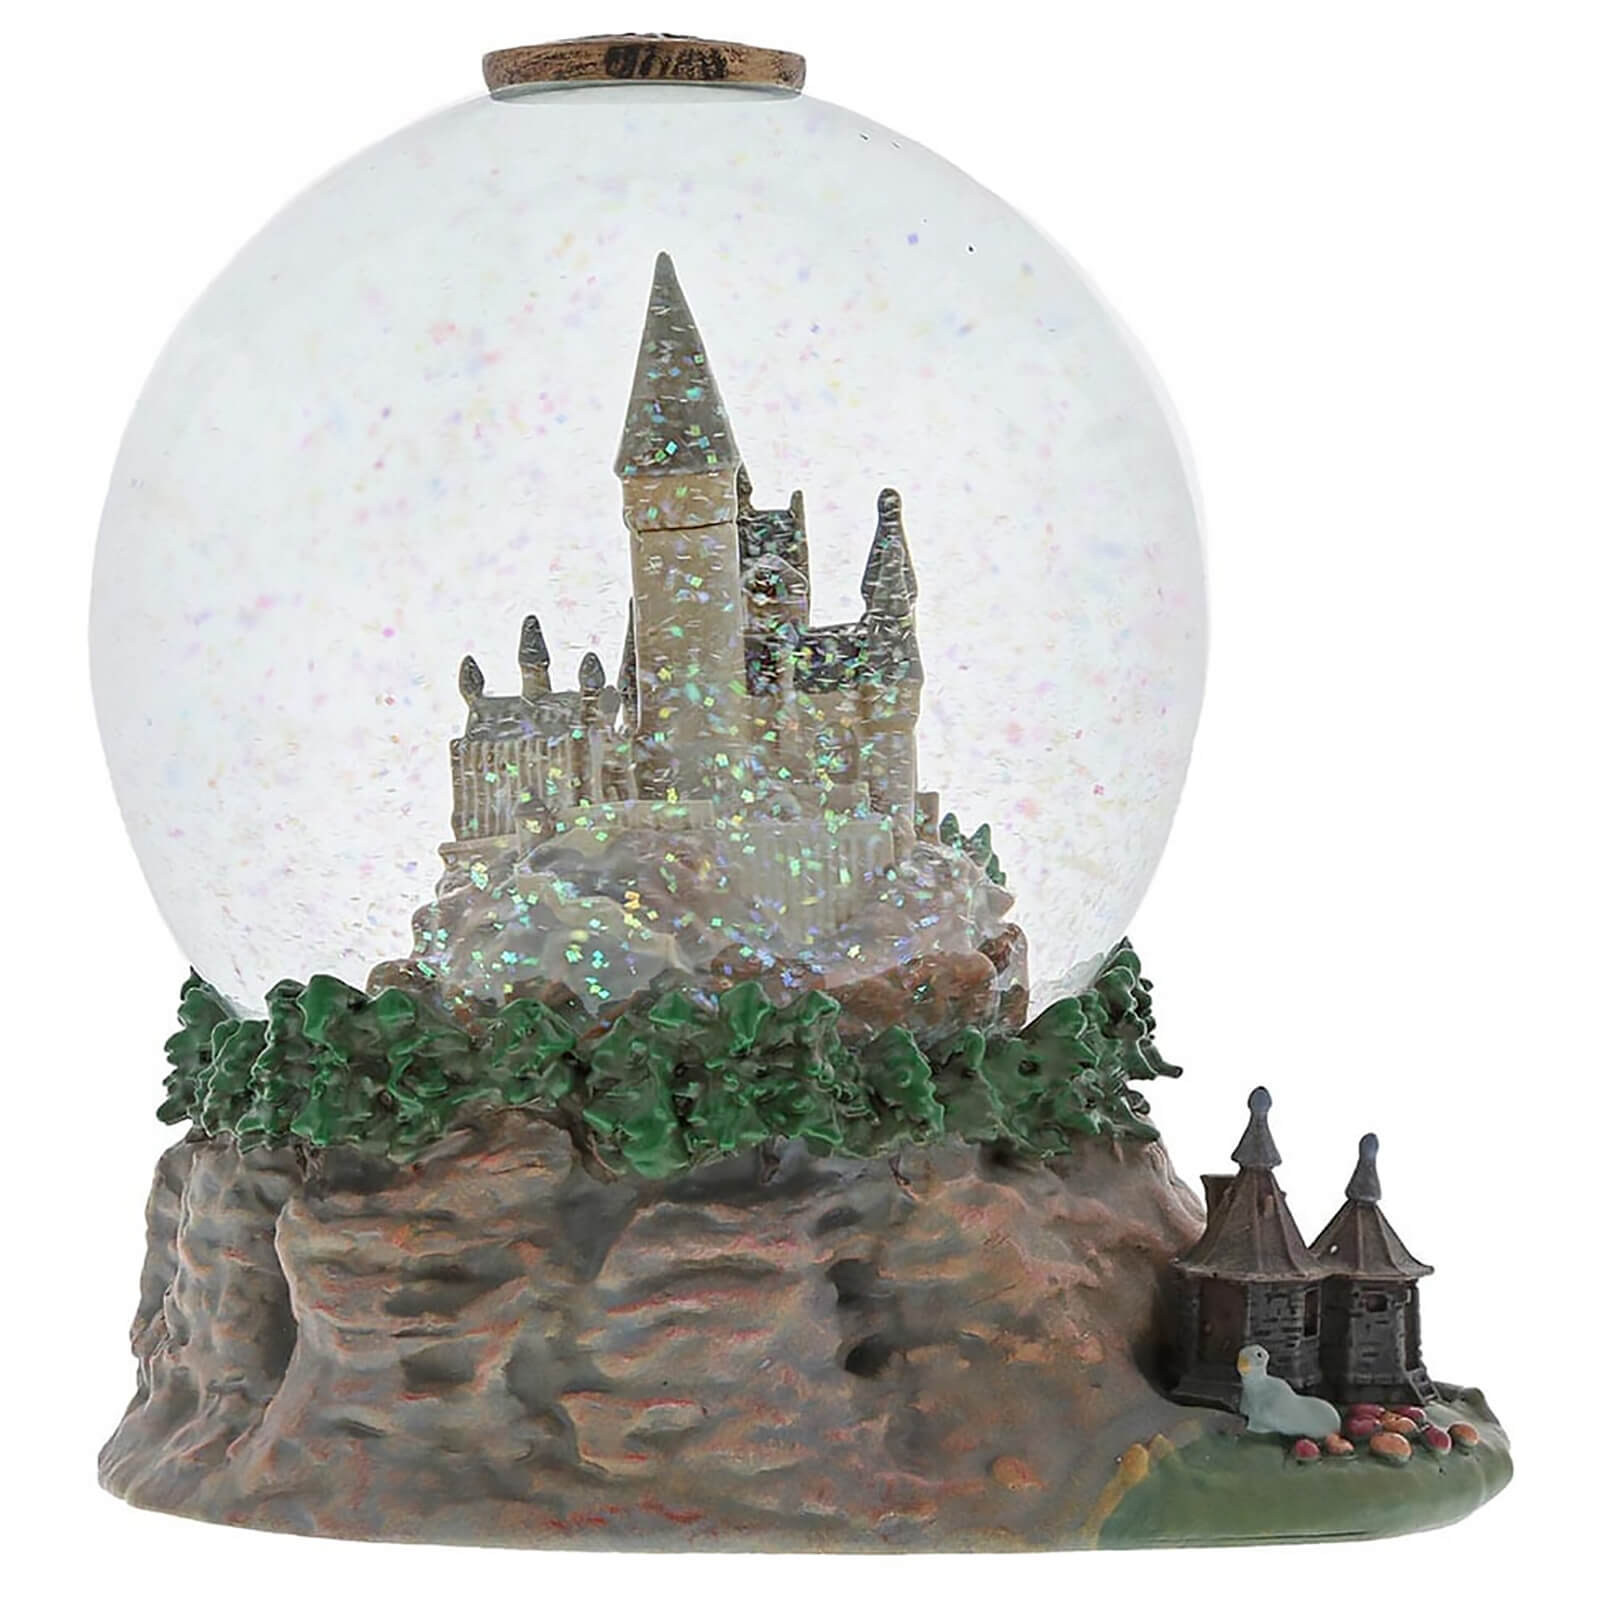 Enesco The Wizarding World of Harry Potter Hogwarts Castle Waterball w/ Hagrid's Hut 120mm